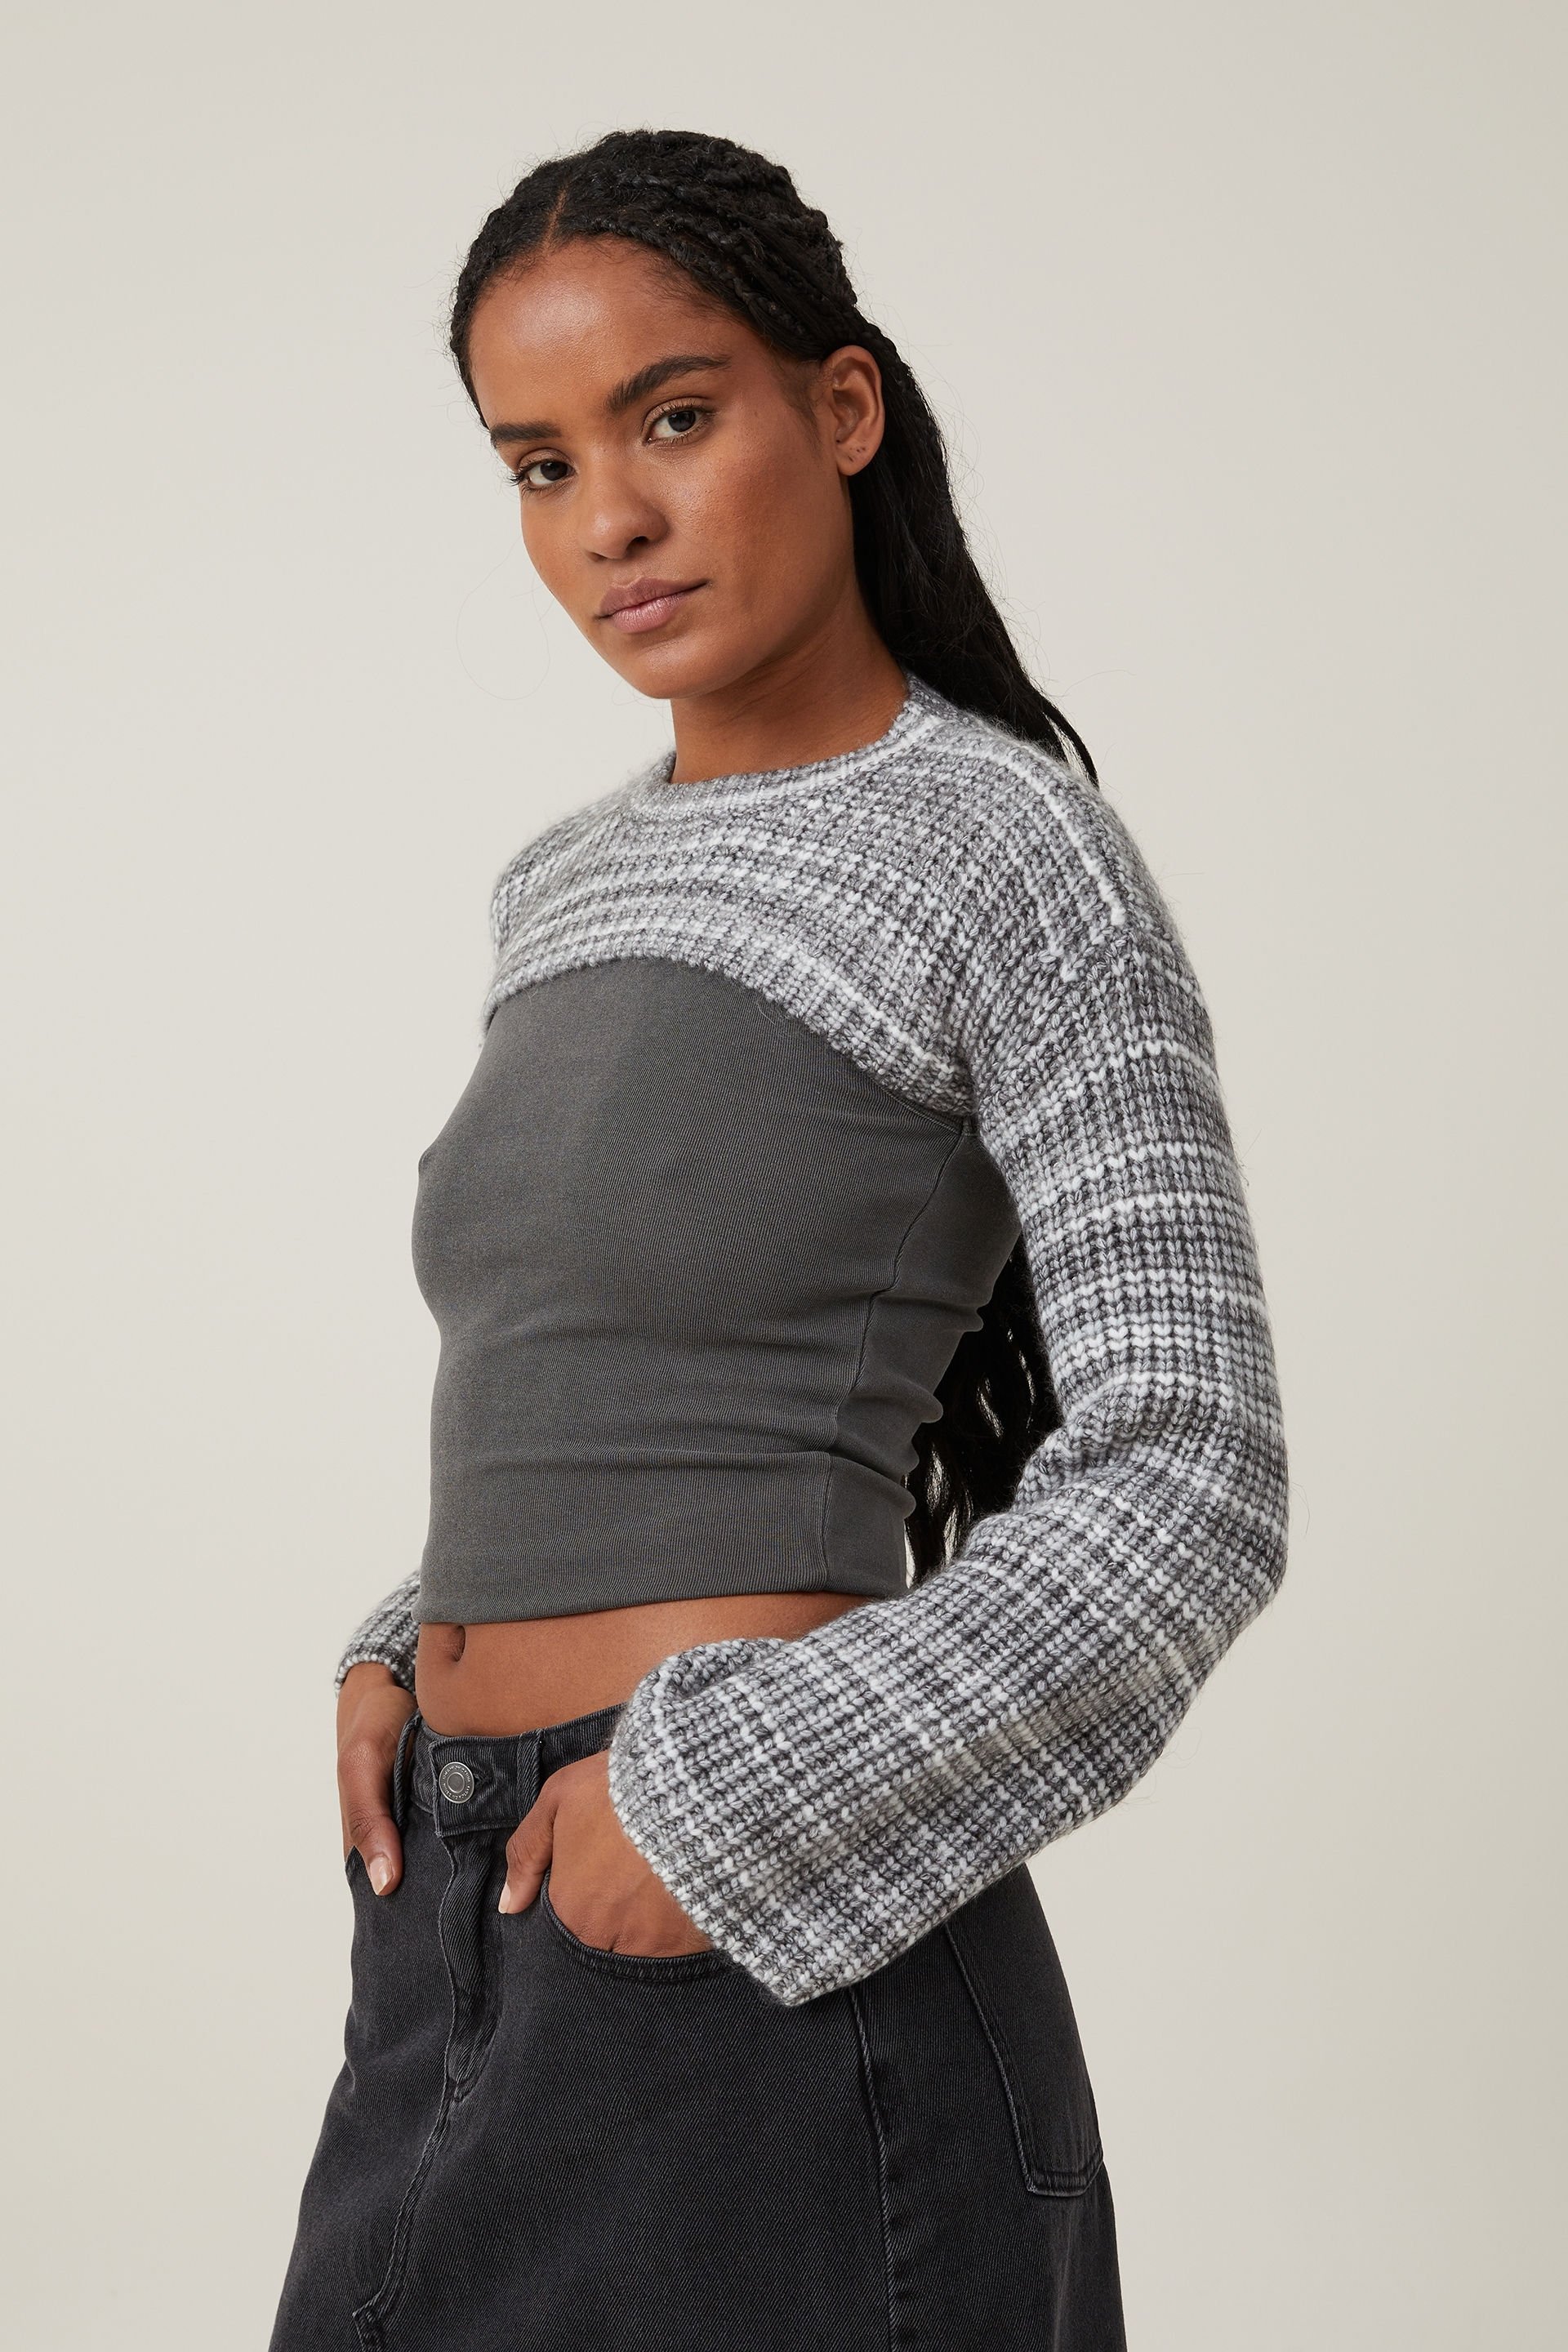 Cotton On Women - Shrug Crop Pullover - Grey multi